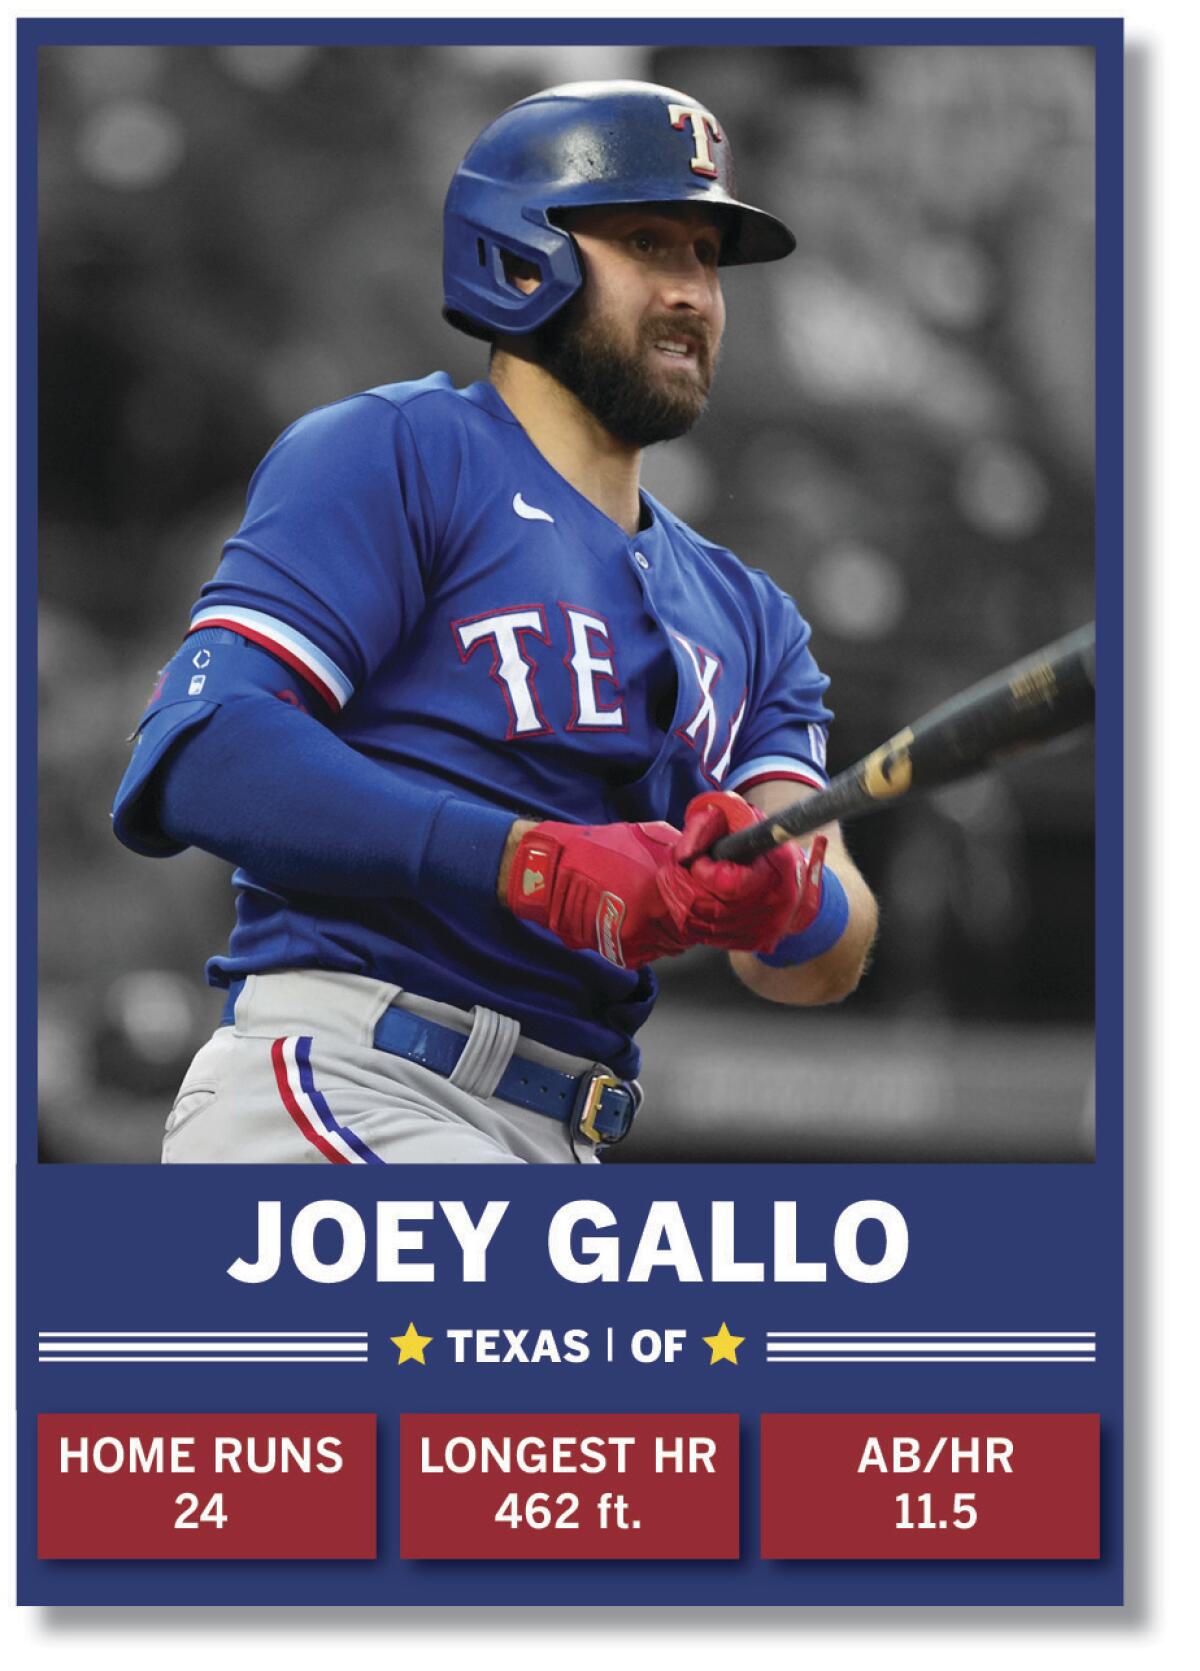 Texas Rangers home run derby competitor Joey Gallo.